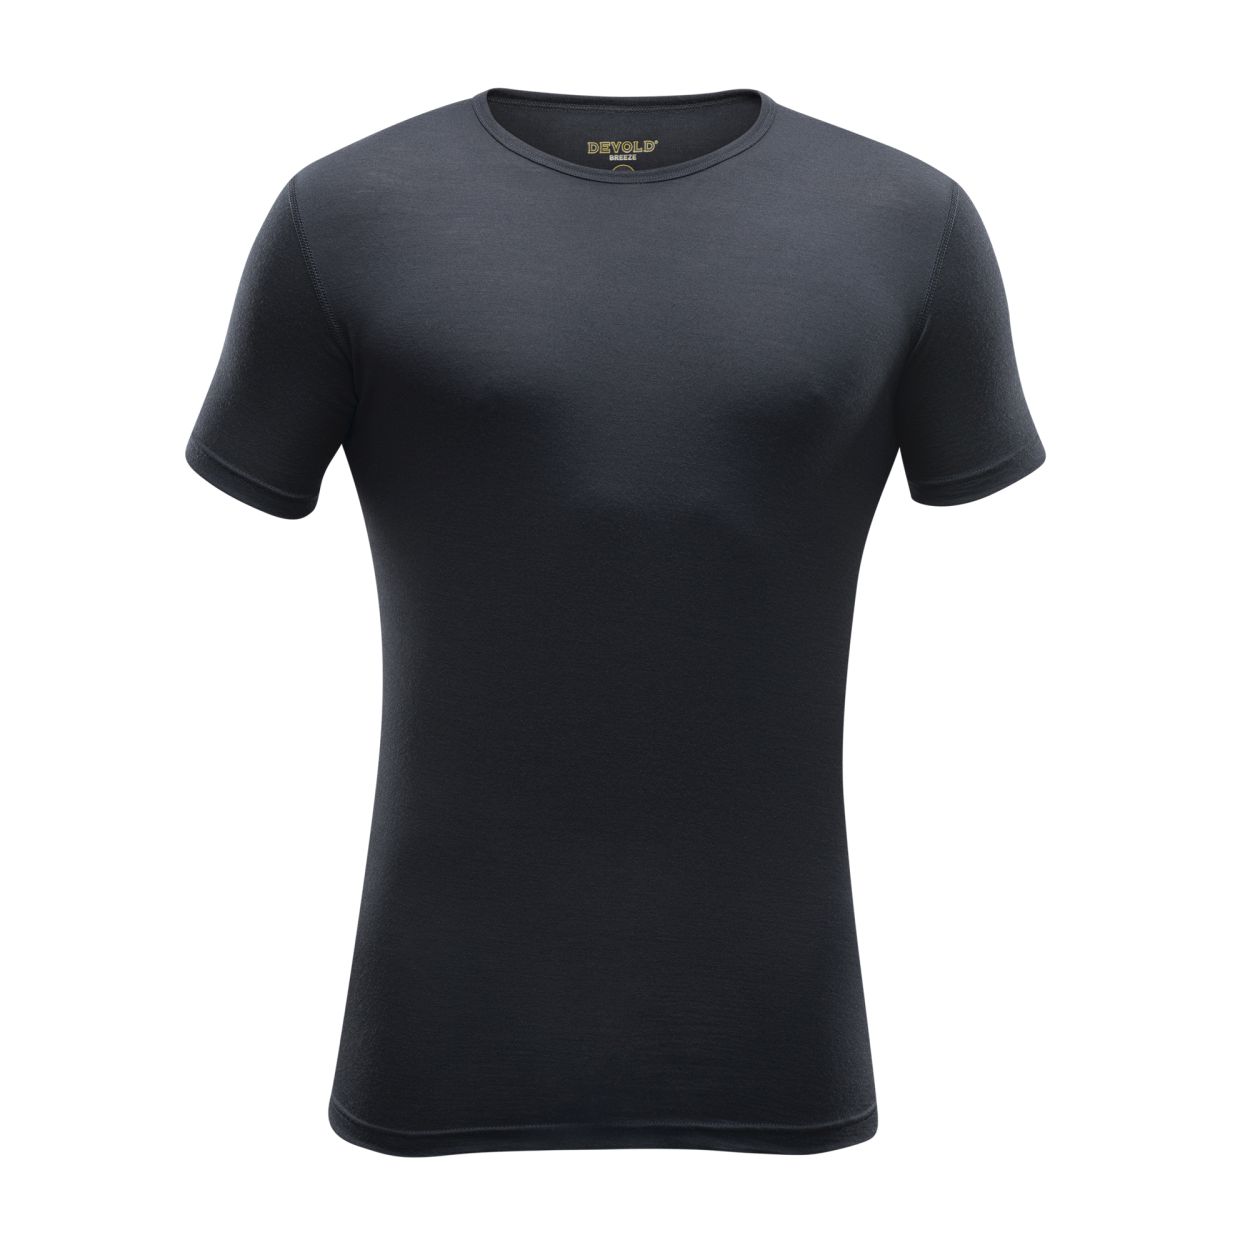 Breeze Man T-Shirt, black